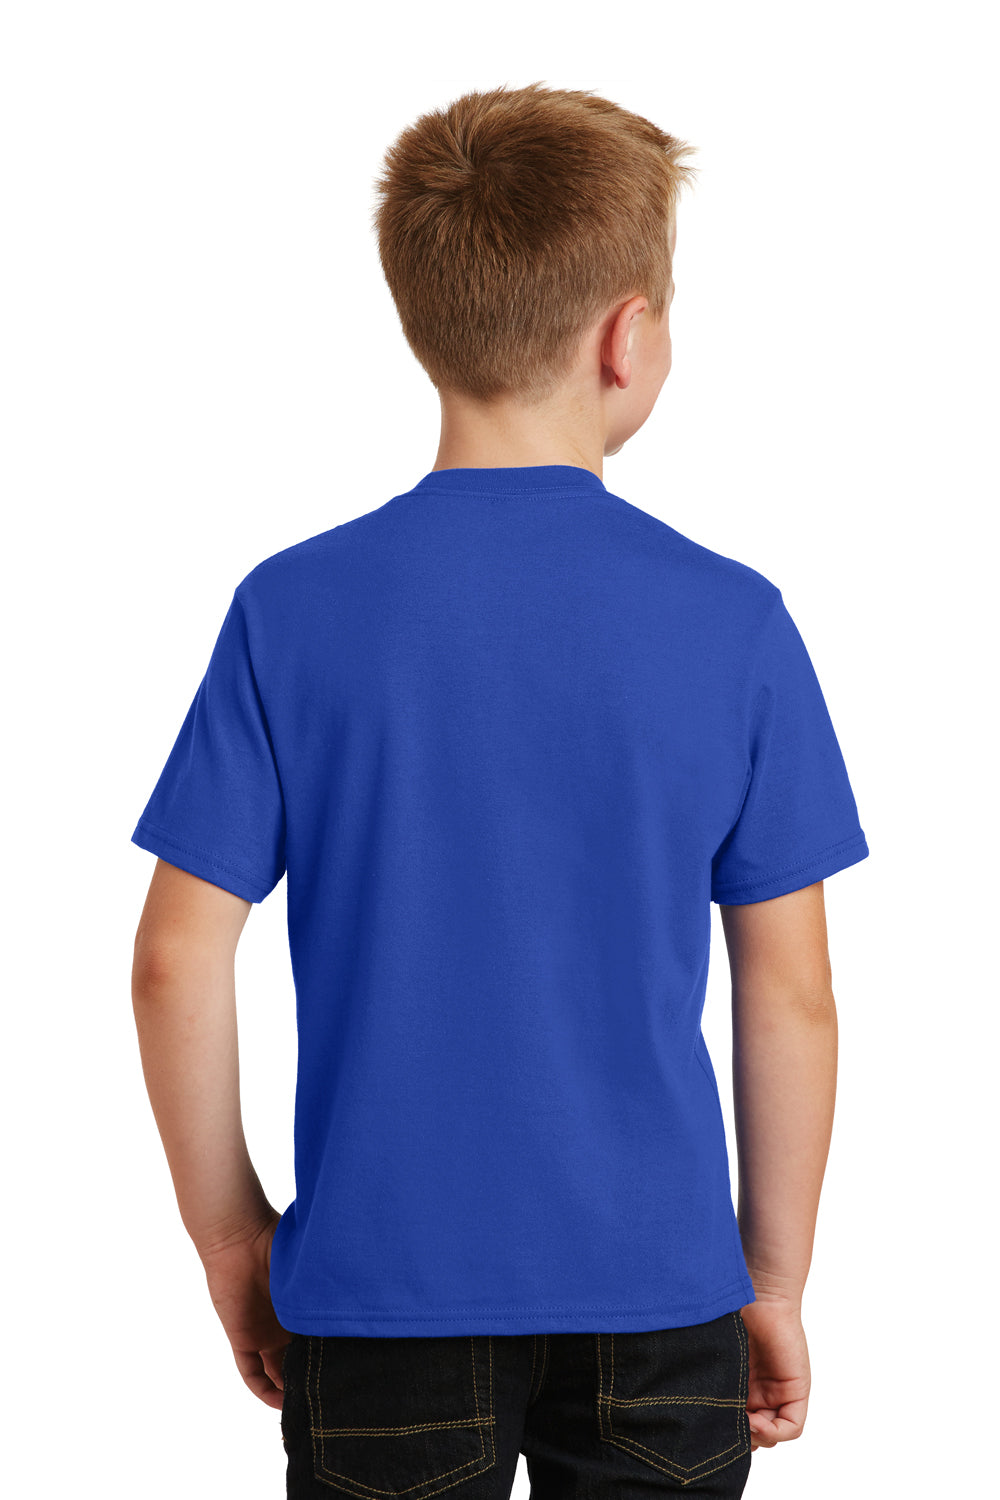 Port & Company PC450Y Youth Fan Favorite Short Sleeve Crewneck T-Shirt Royal Blue Back